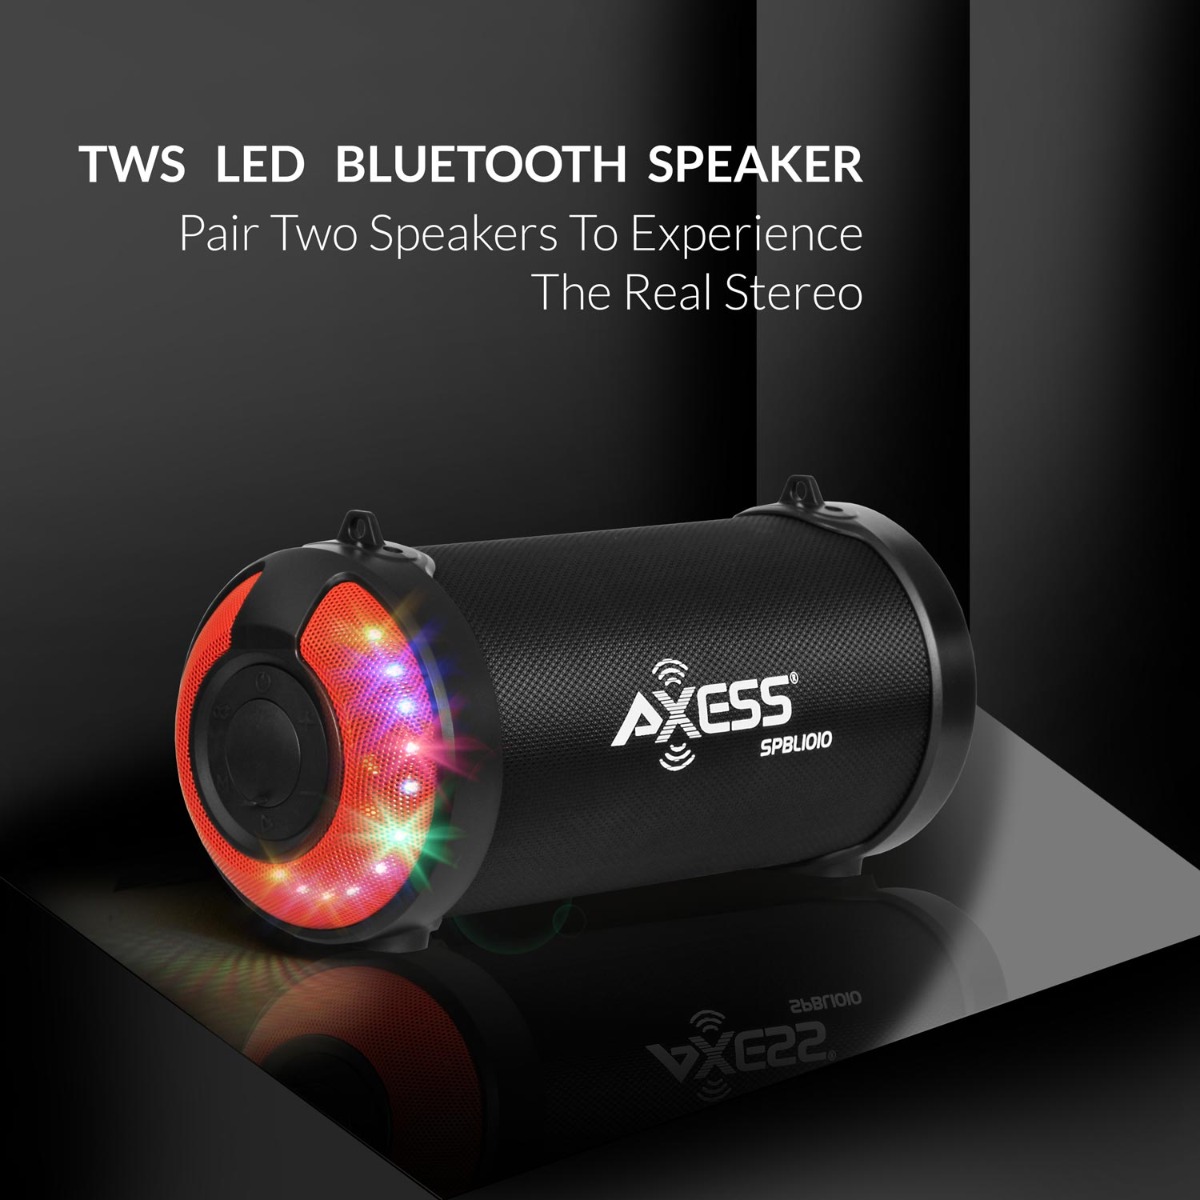 SPBL1010 Axess Bluetooth Speaker